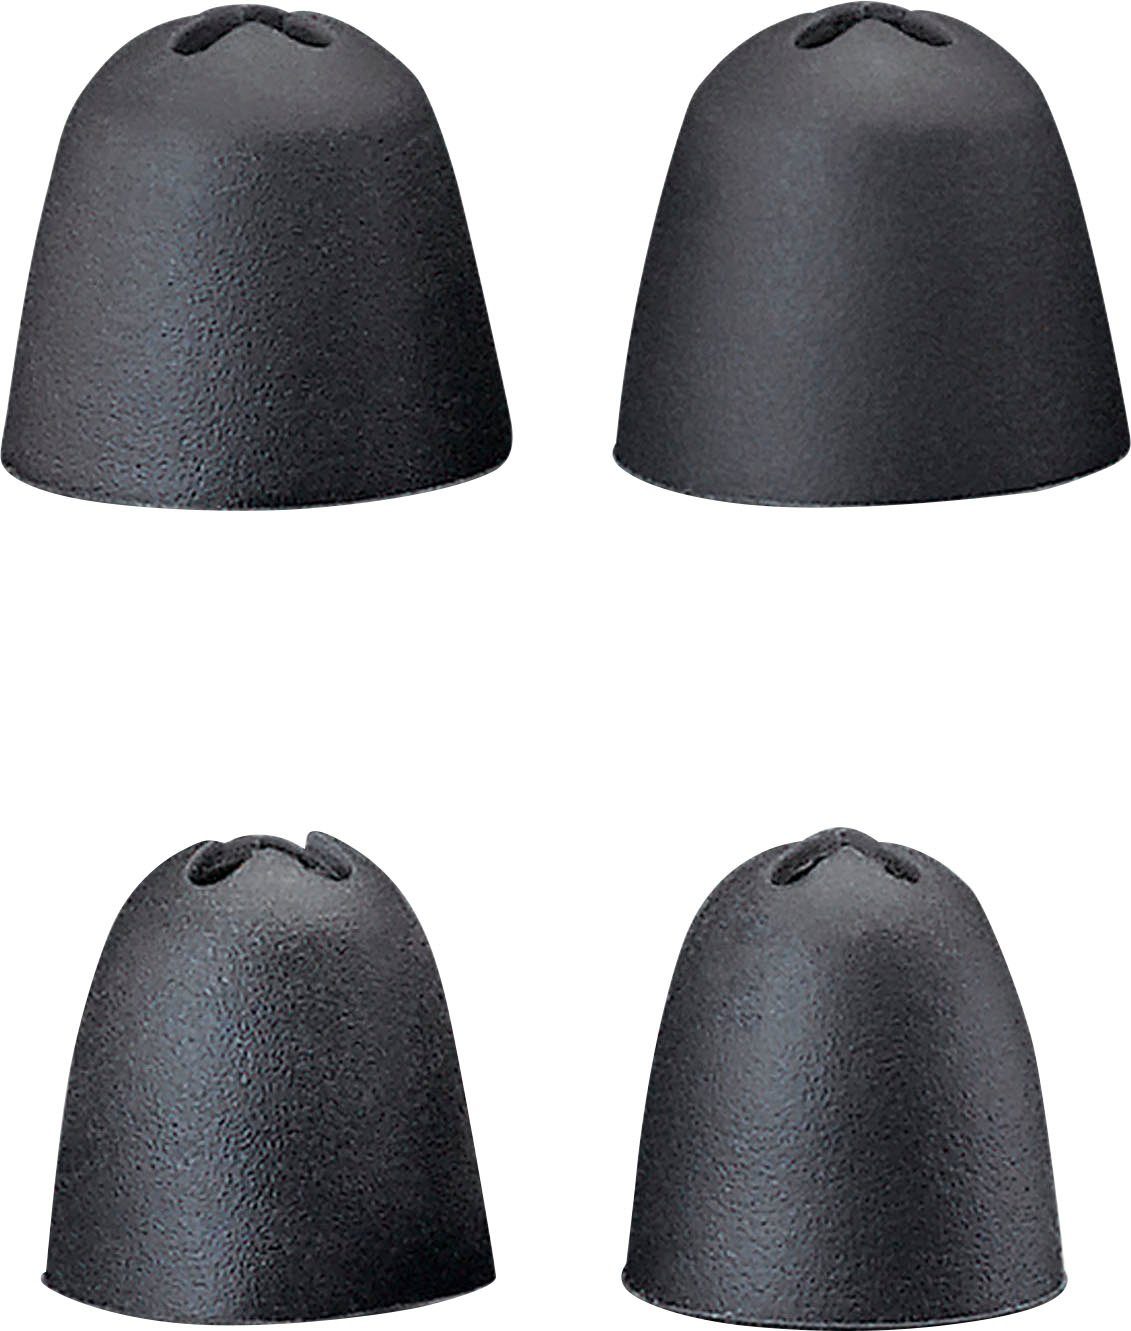 Gehörverstärker-Kopfhörer HPW-400BK Lenco Kopfhörer Kabellose